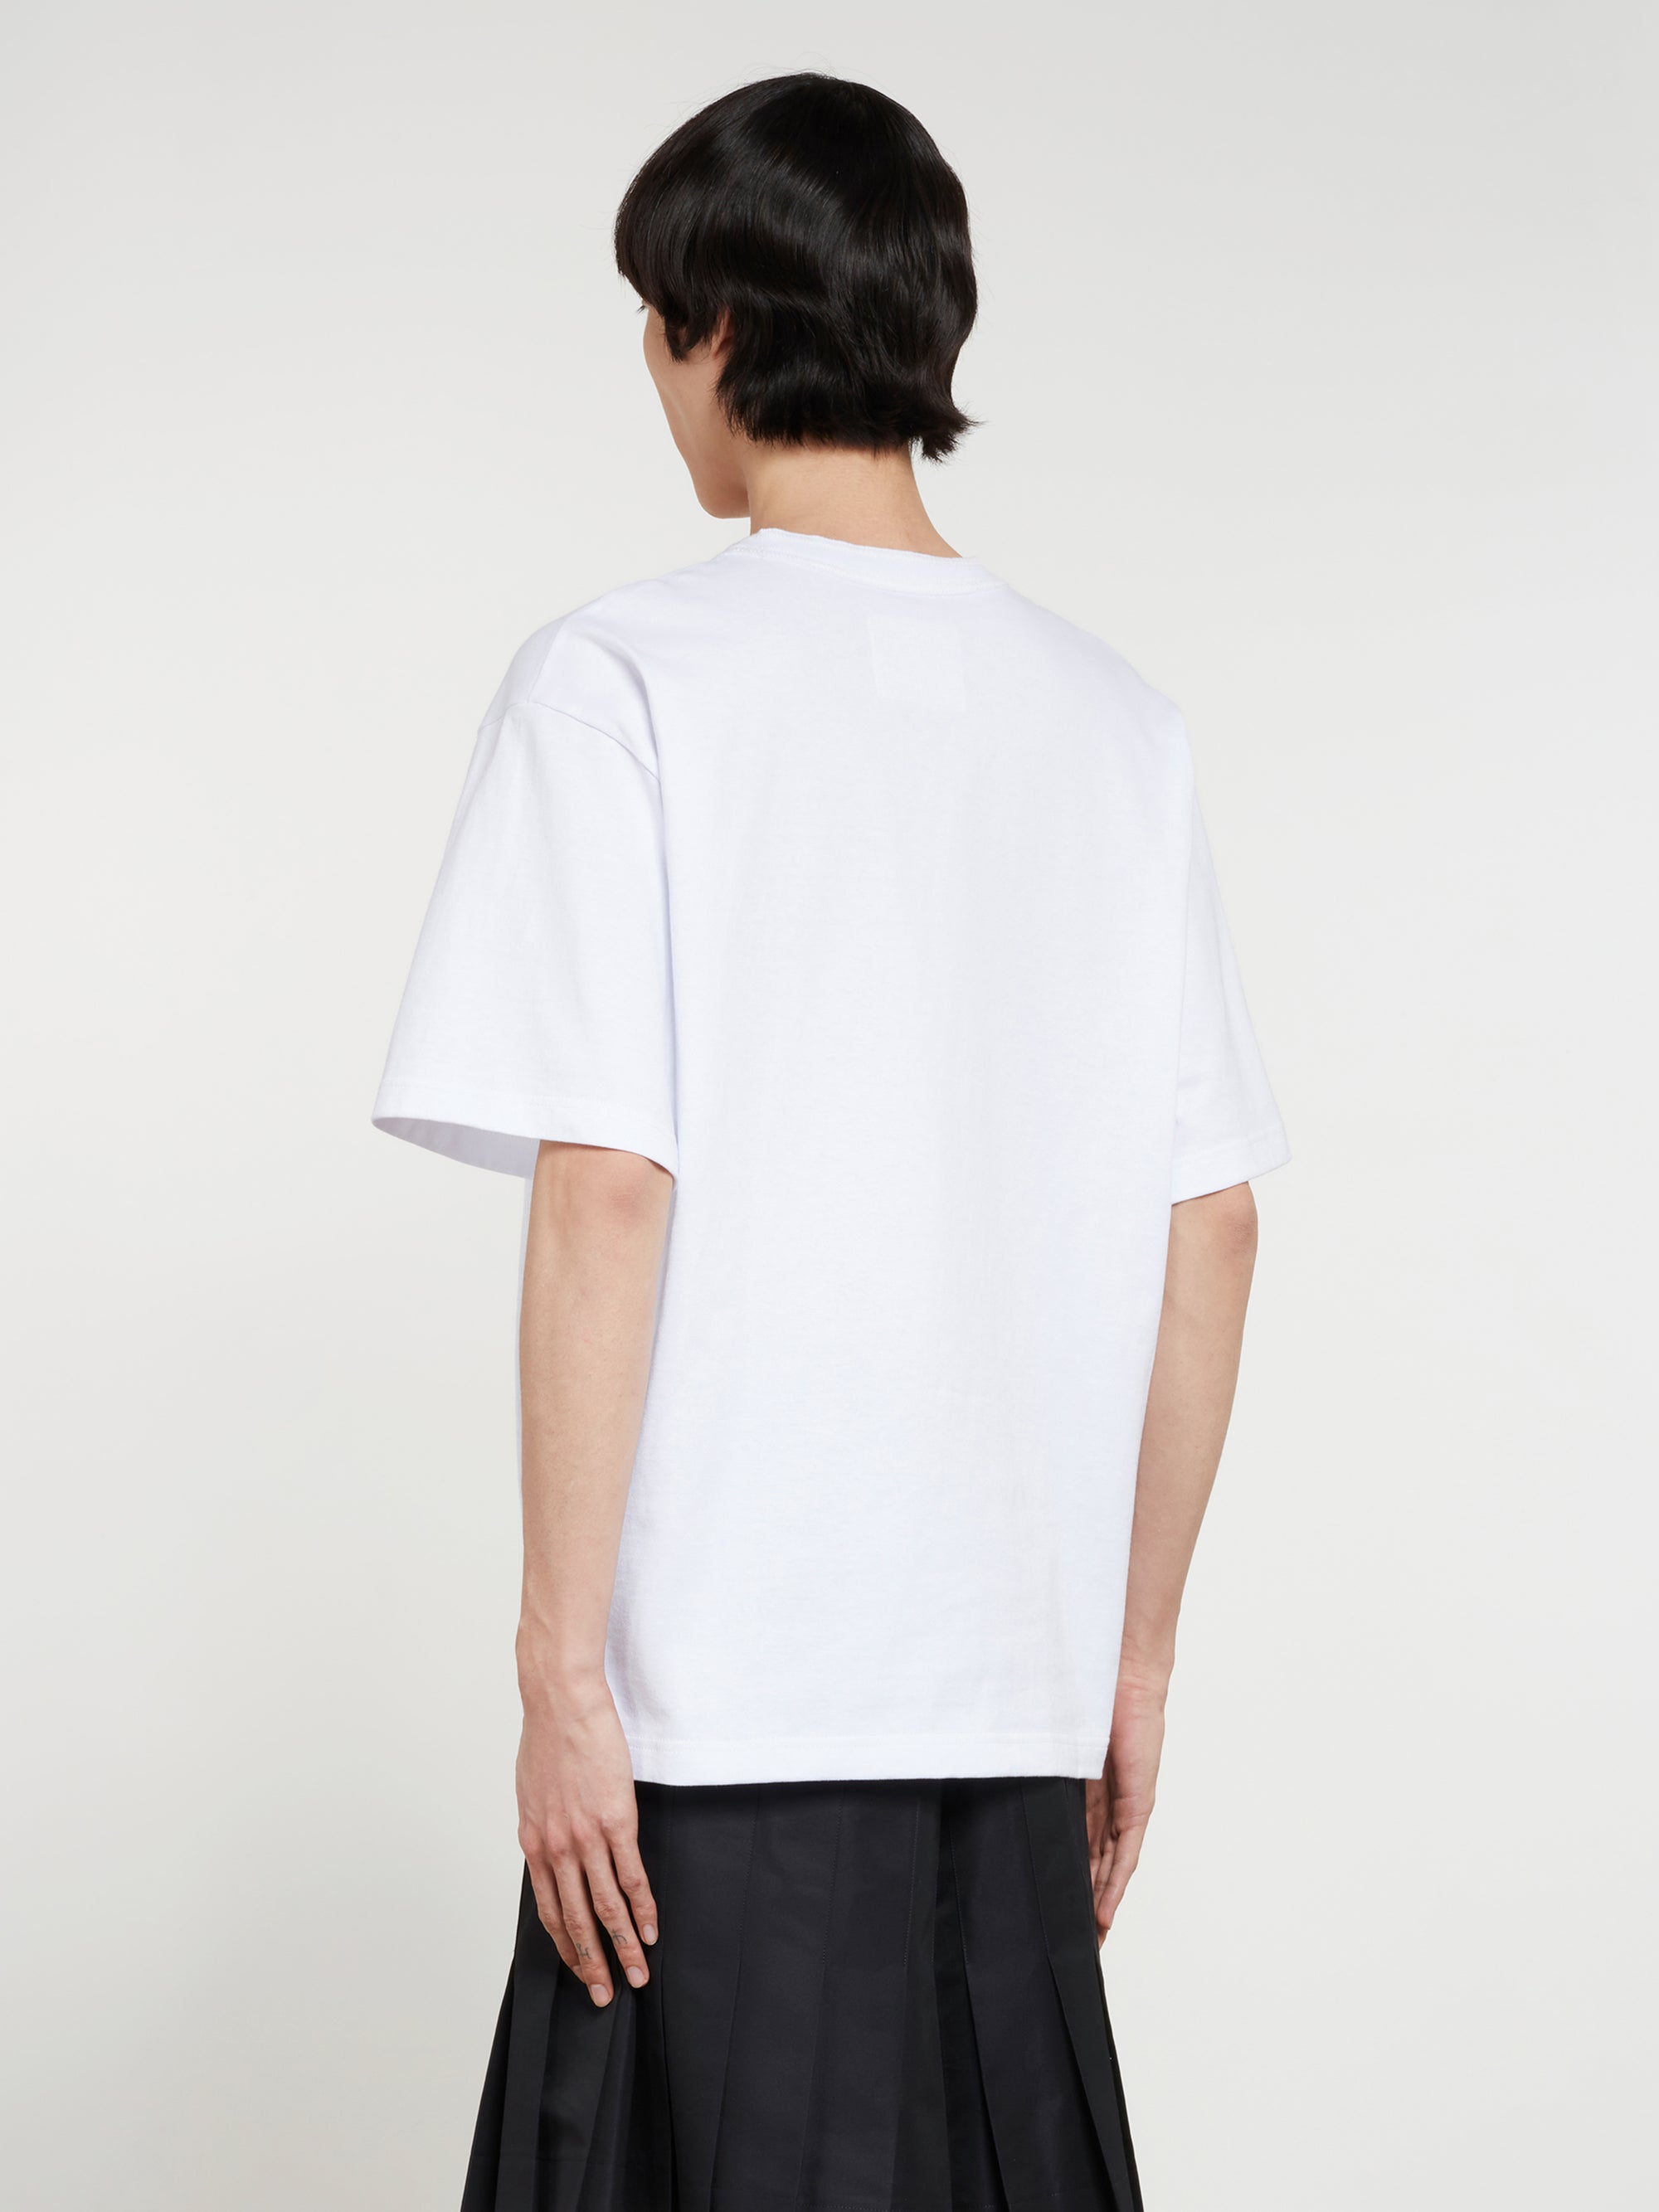 Sacai - Men’s Nylon Twill Cotton Jersey T-shirt - (Off White) view 3